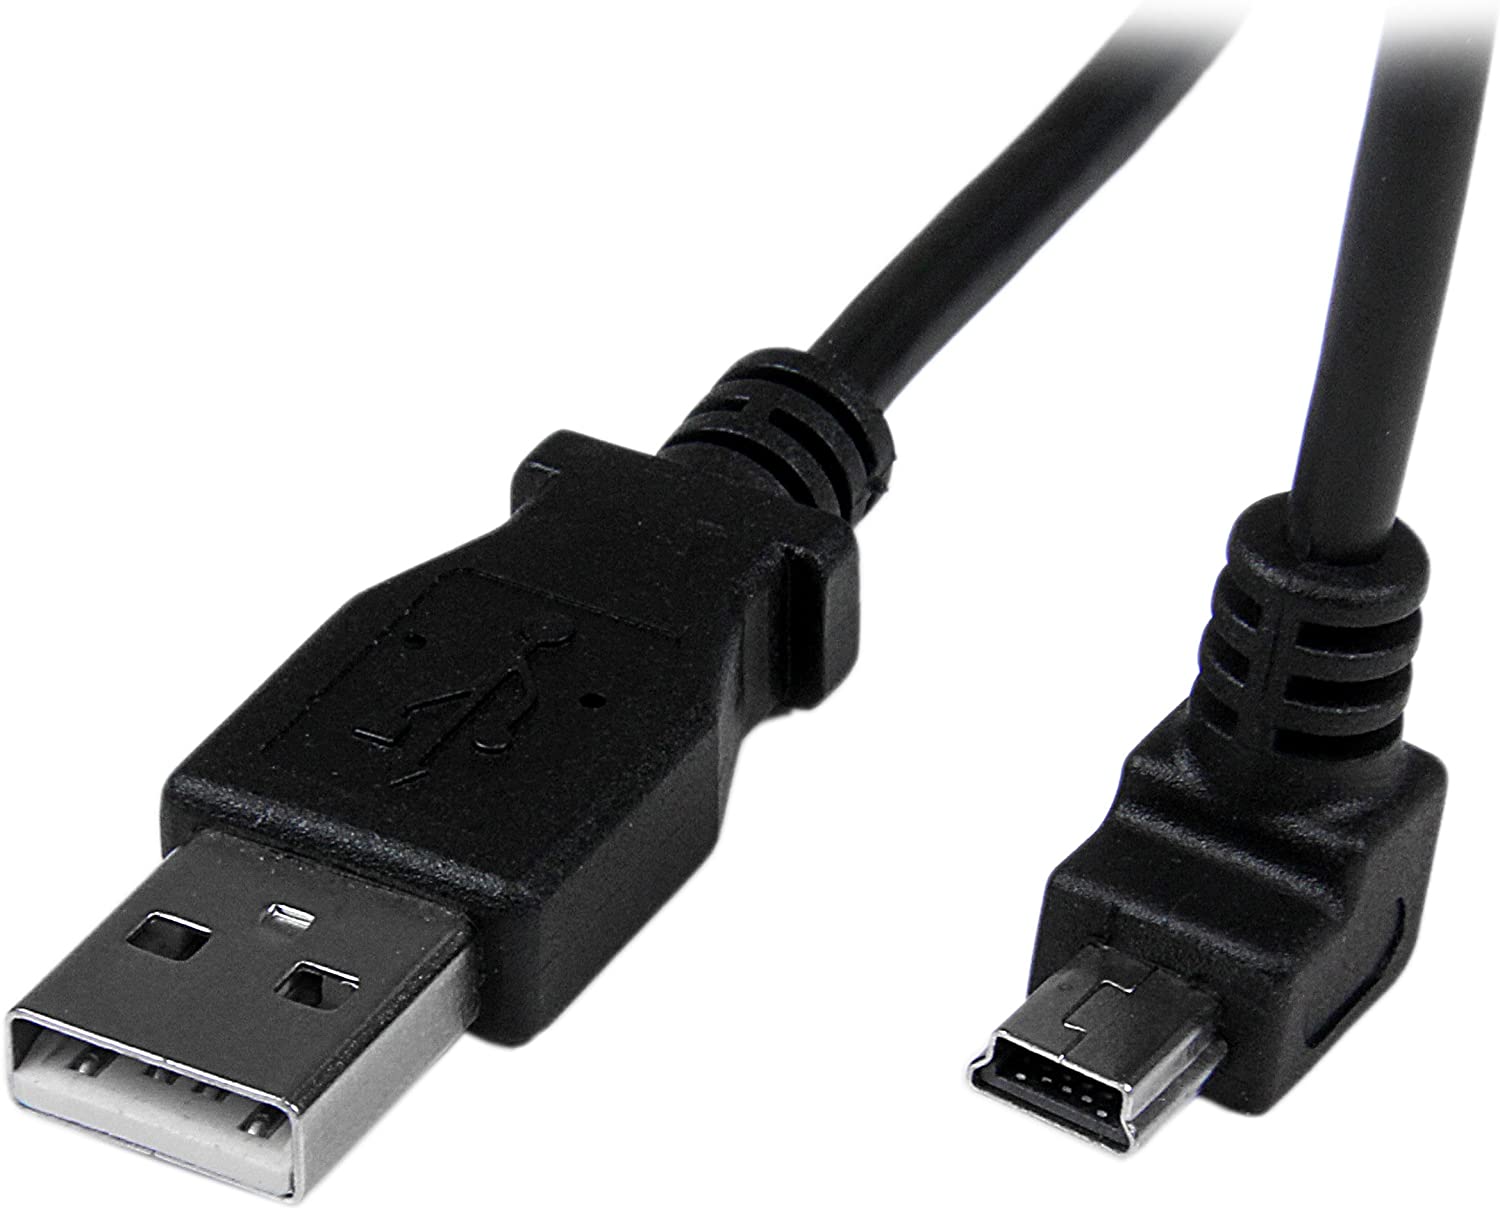 StarTech.com Down Angle Mini USB Cable - 2m - Black - USB A to Mini USB B - USB to Mini USB Cable. - e4cents